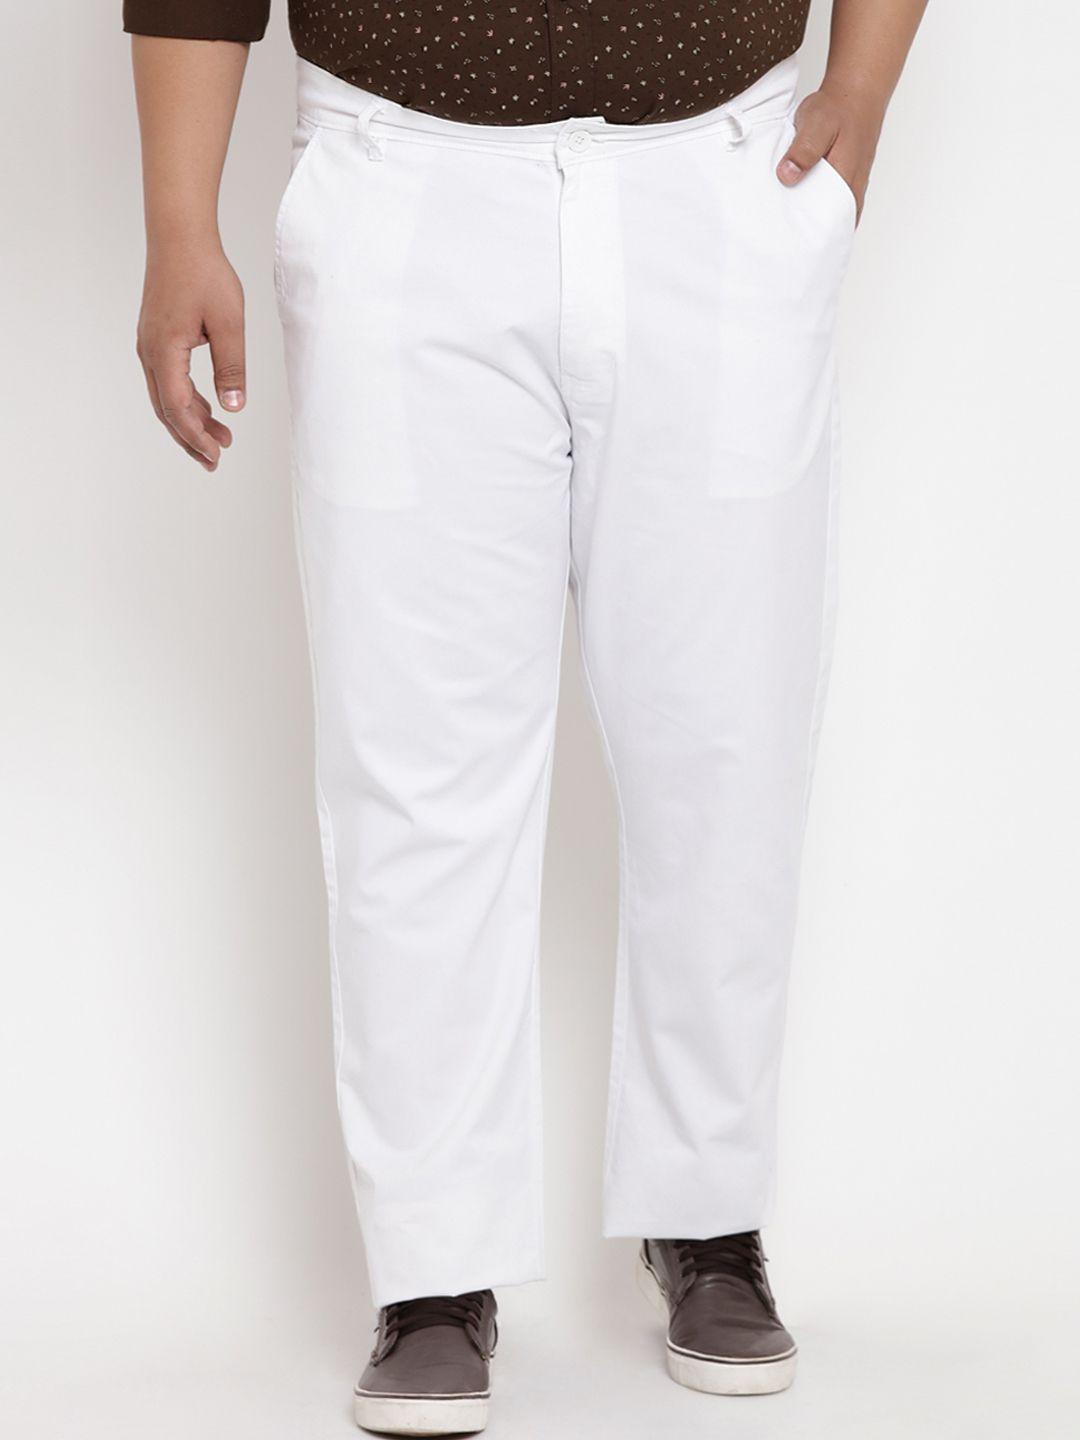 john pride plus size men white regular fit solid regular trousers